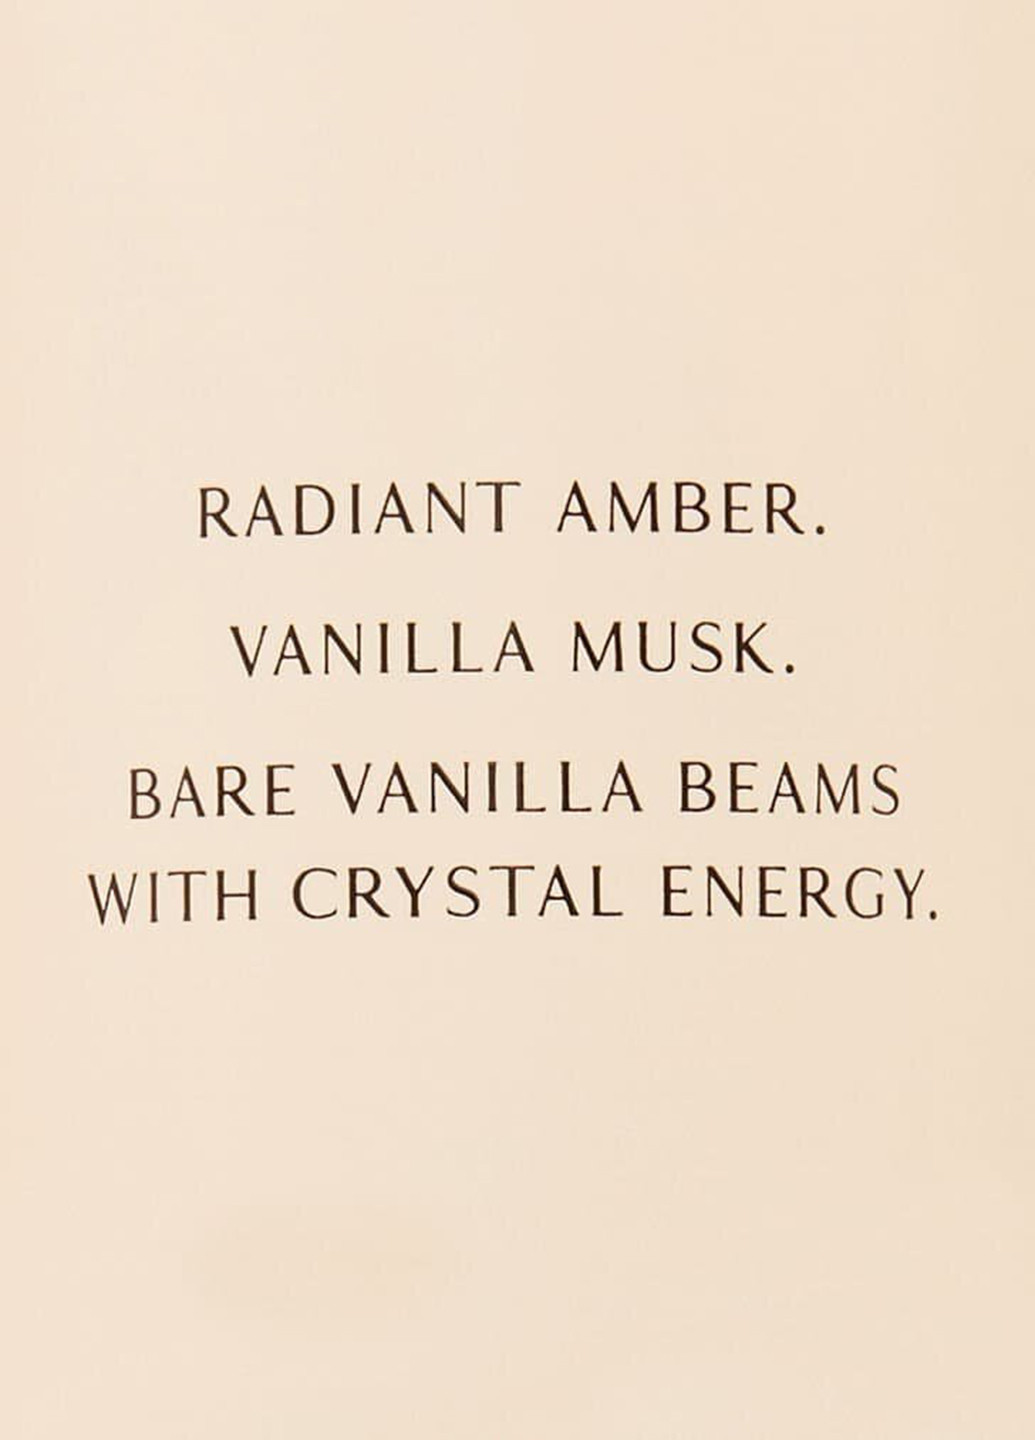 Парфюмерный набор Bare Vanilla Crystal Victoria's Secret (251744368)